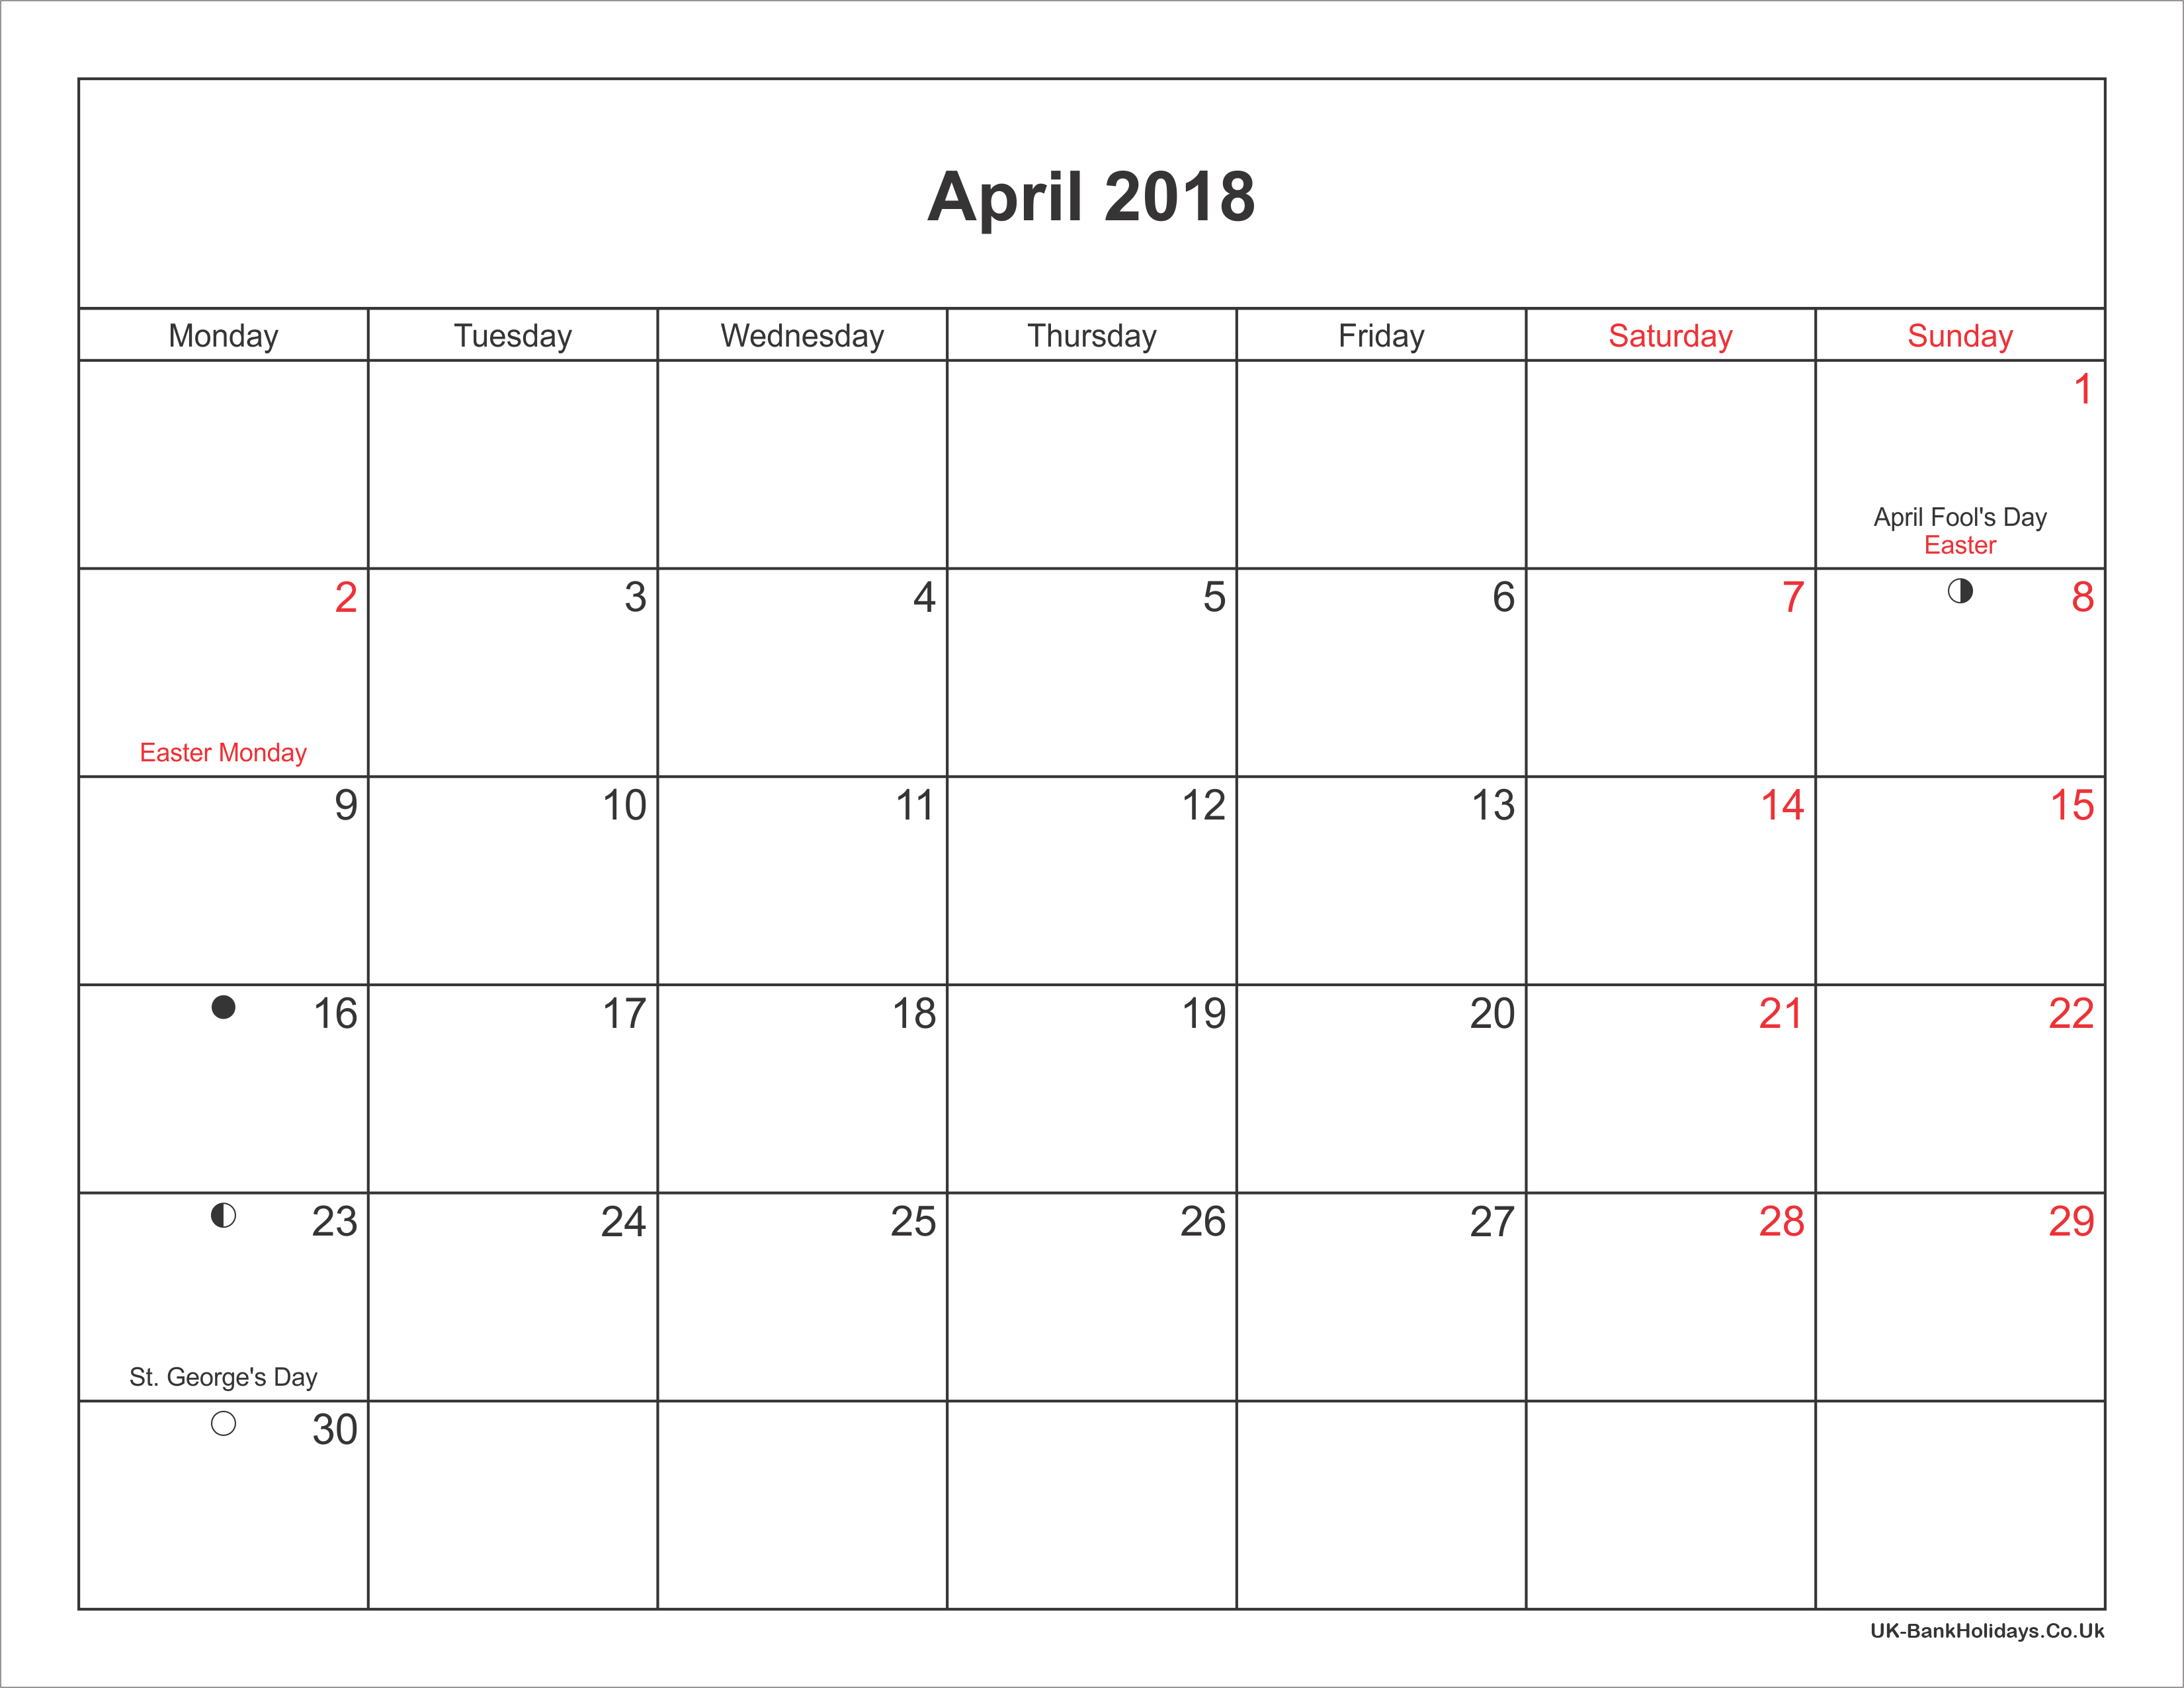 April 2018 Calendar Printable With Bank Holidays UK